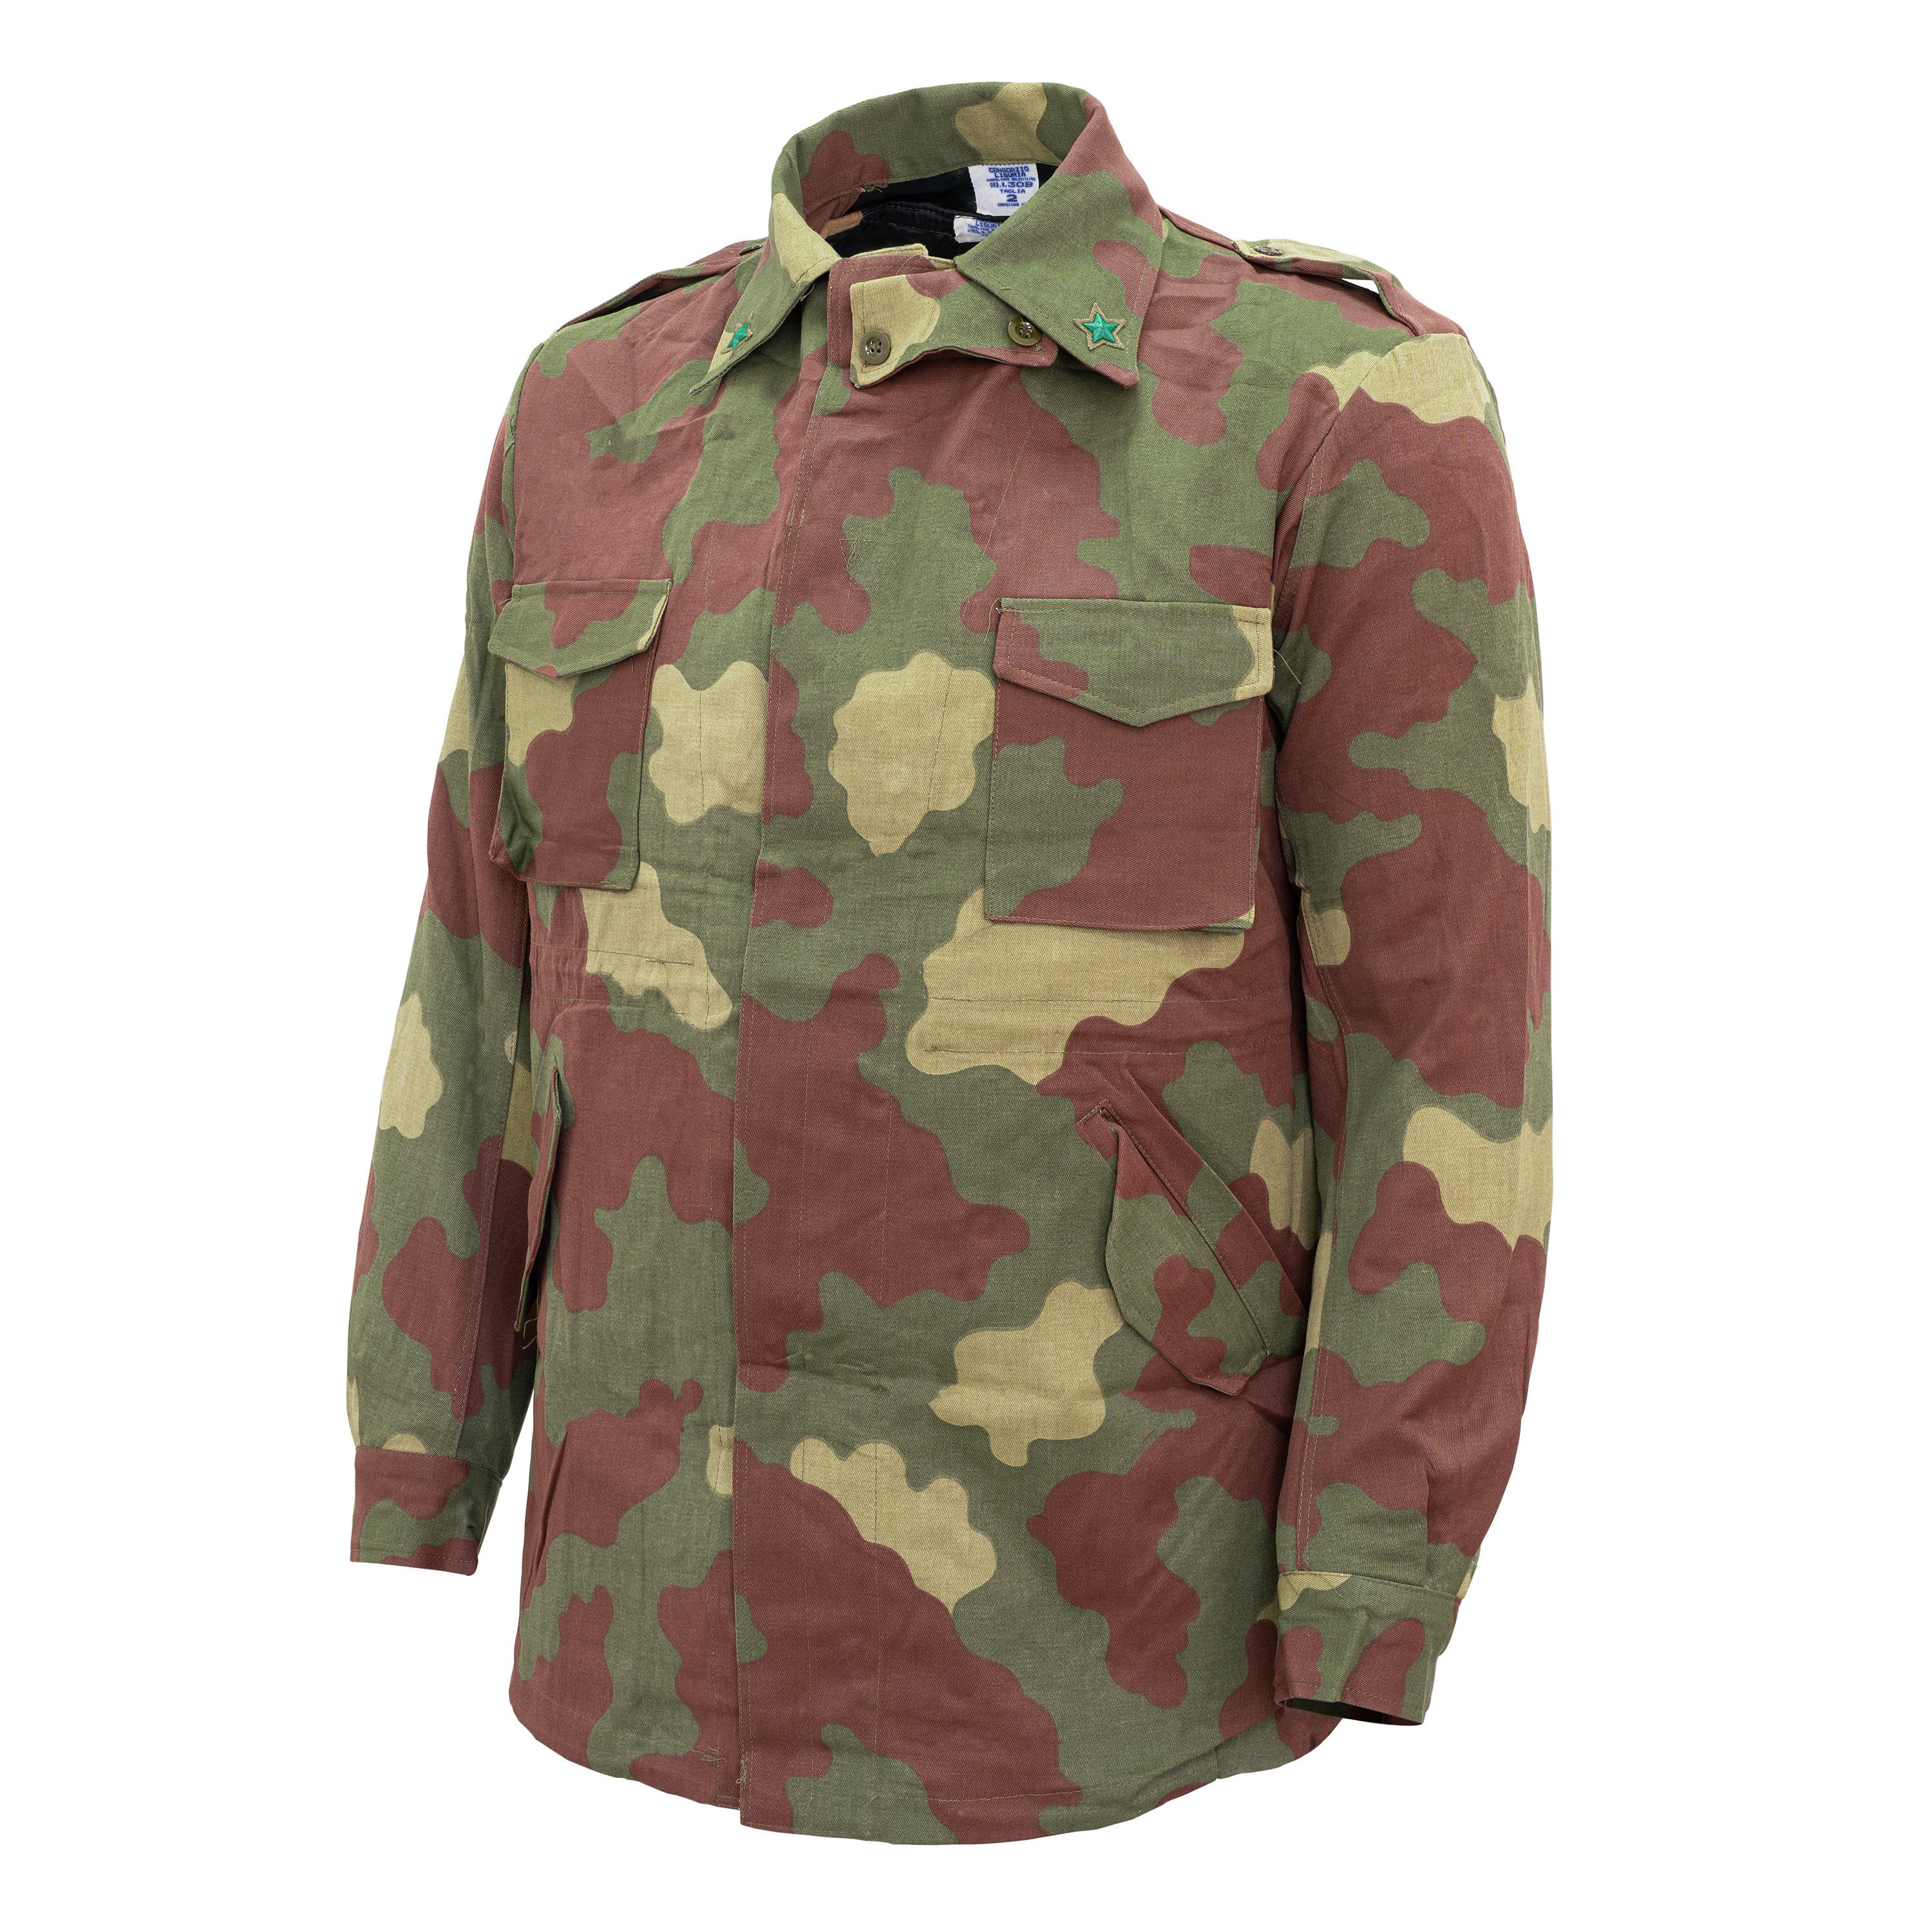 Italian original LIGURIA jacket with insert SAN MARCO Italien Army 91035555 L-11